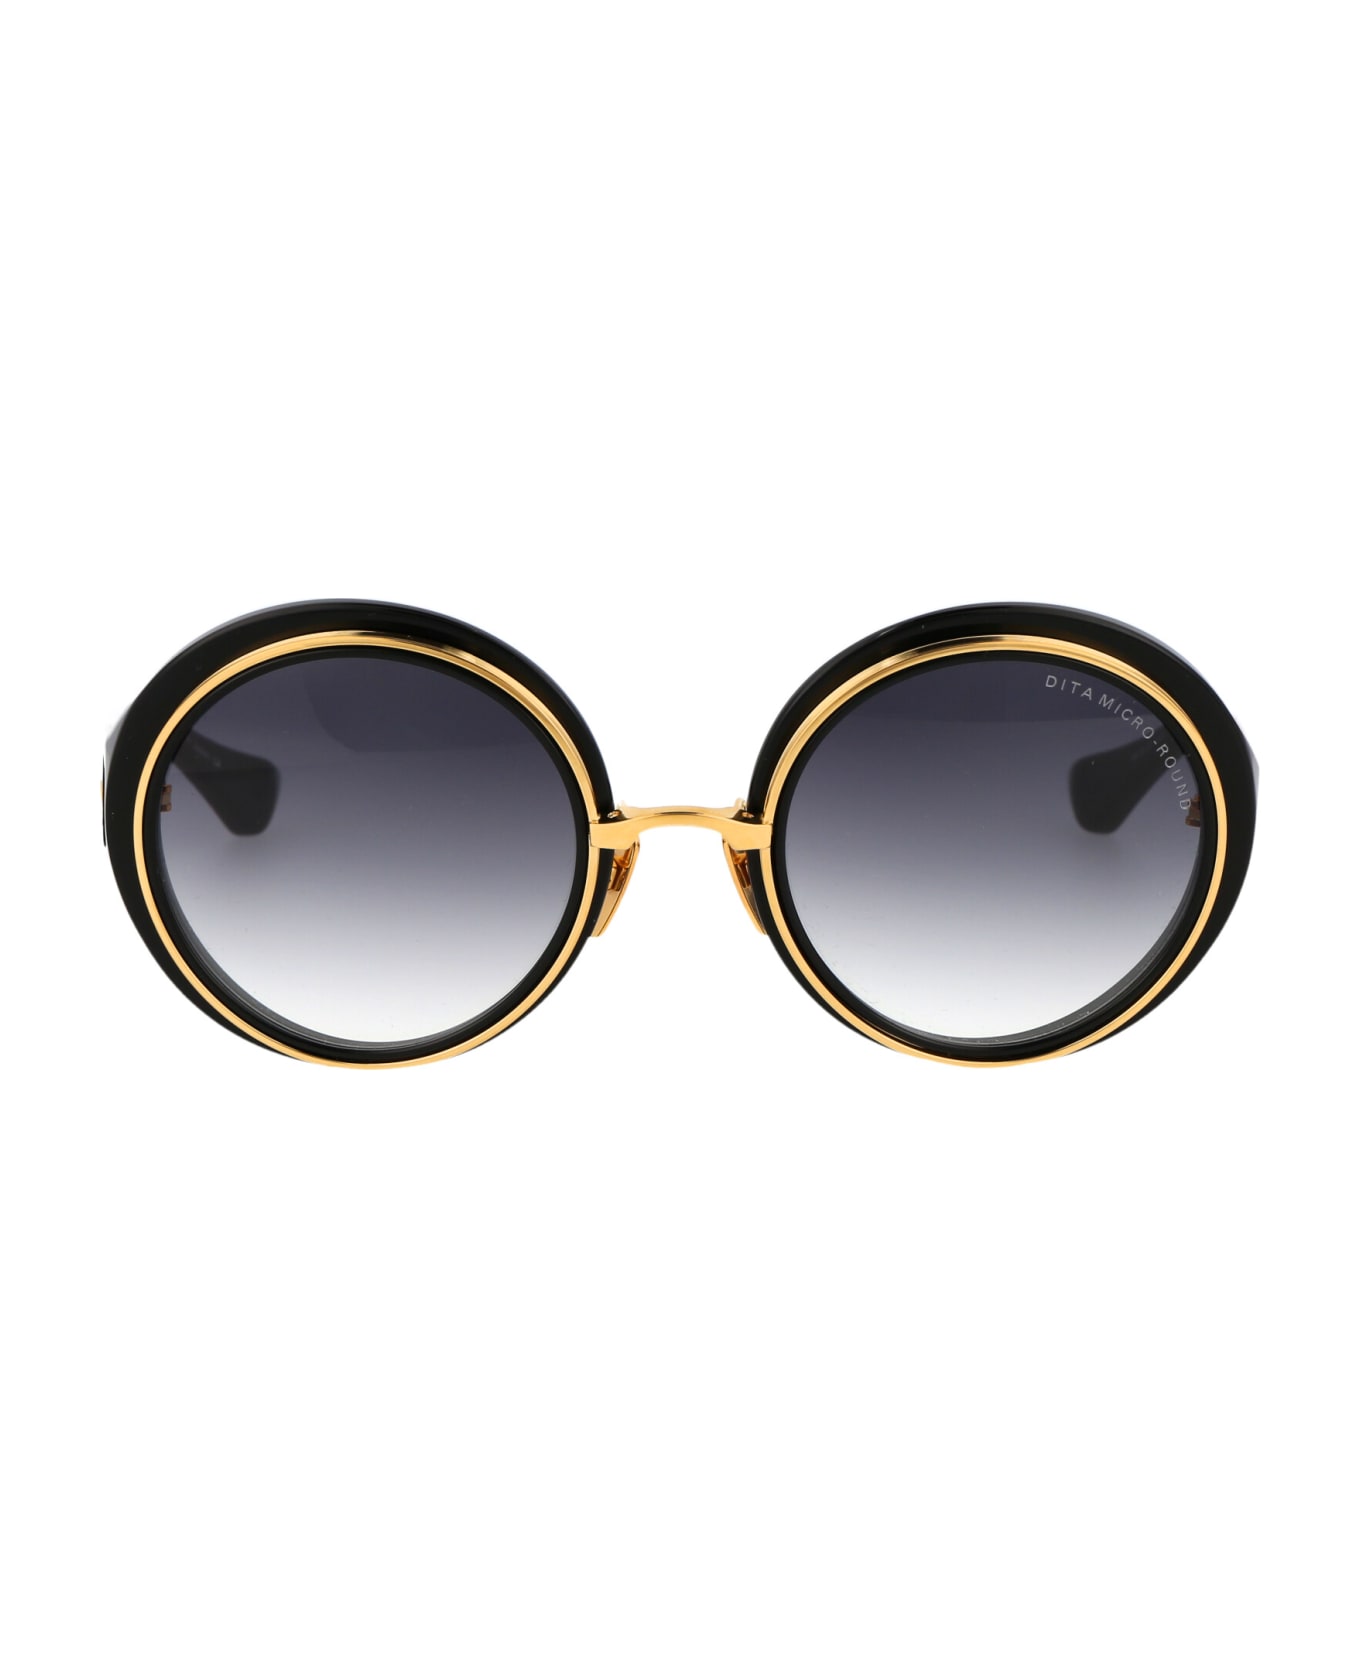 Dita Micro-round Sunglasses - 01 BLACK - YELLOW GOLD W/ DARK GREY TO CLEAR GRADIENT